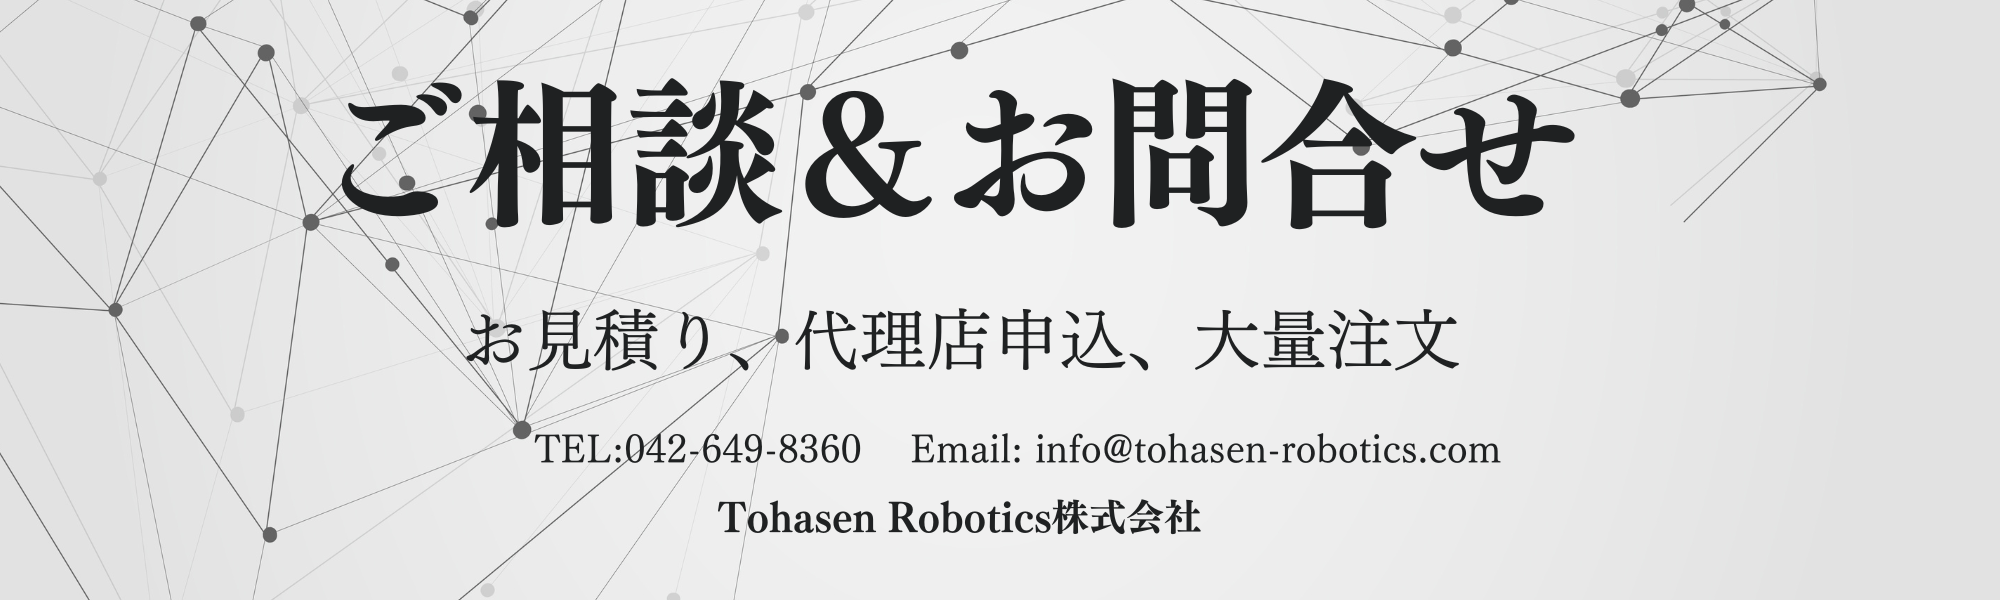 Tohasen Robotics株式会社総合問い合わせフォーム